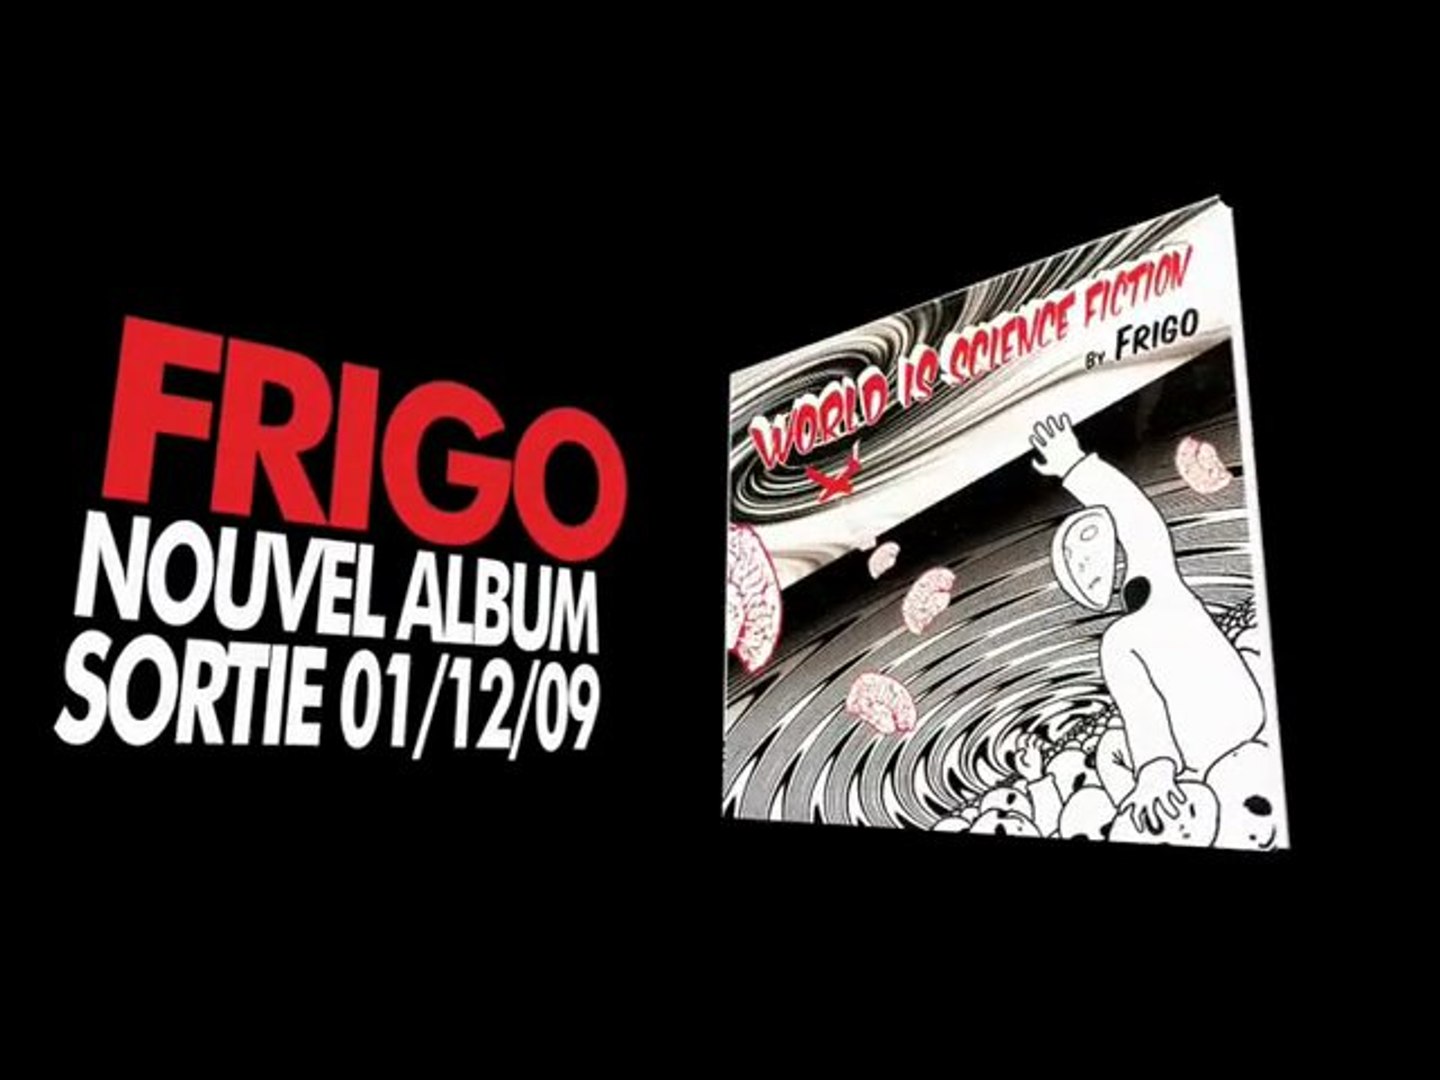 NOUVEL ALBUM DE FRIGO : "WORLD IS SCIENCE FICTION" - Vidéo Dailymotion